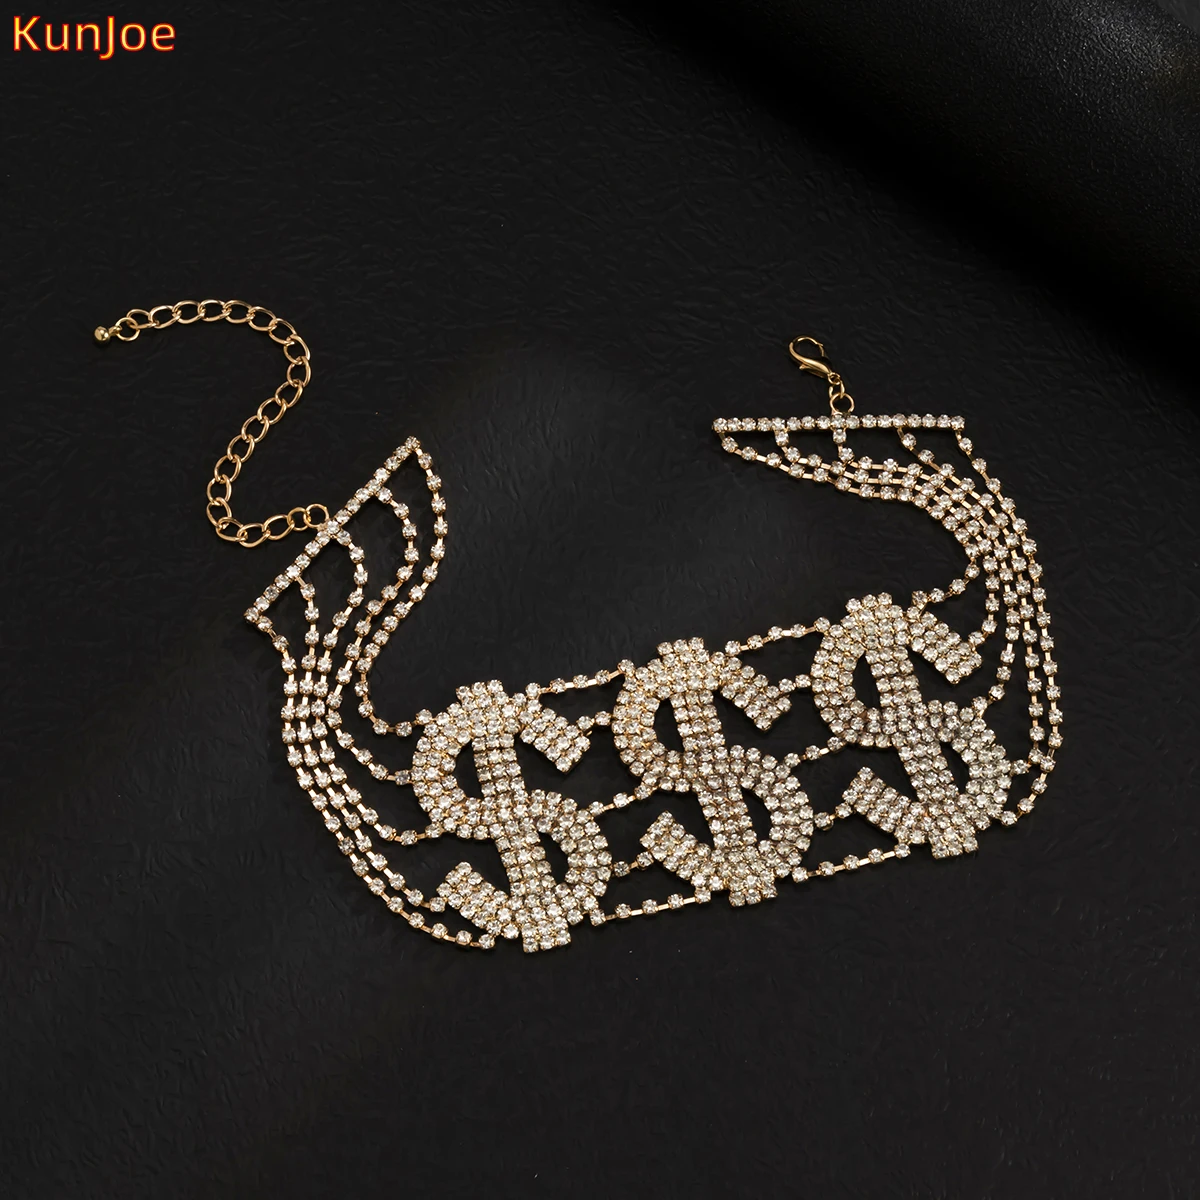 

KunJoe Big Money Dollar Rhinestone Necklace Statement Choker for Women Fashion Crystal Collar Necklace Chain Party Jewelry Gift